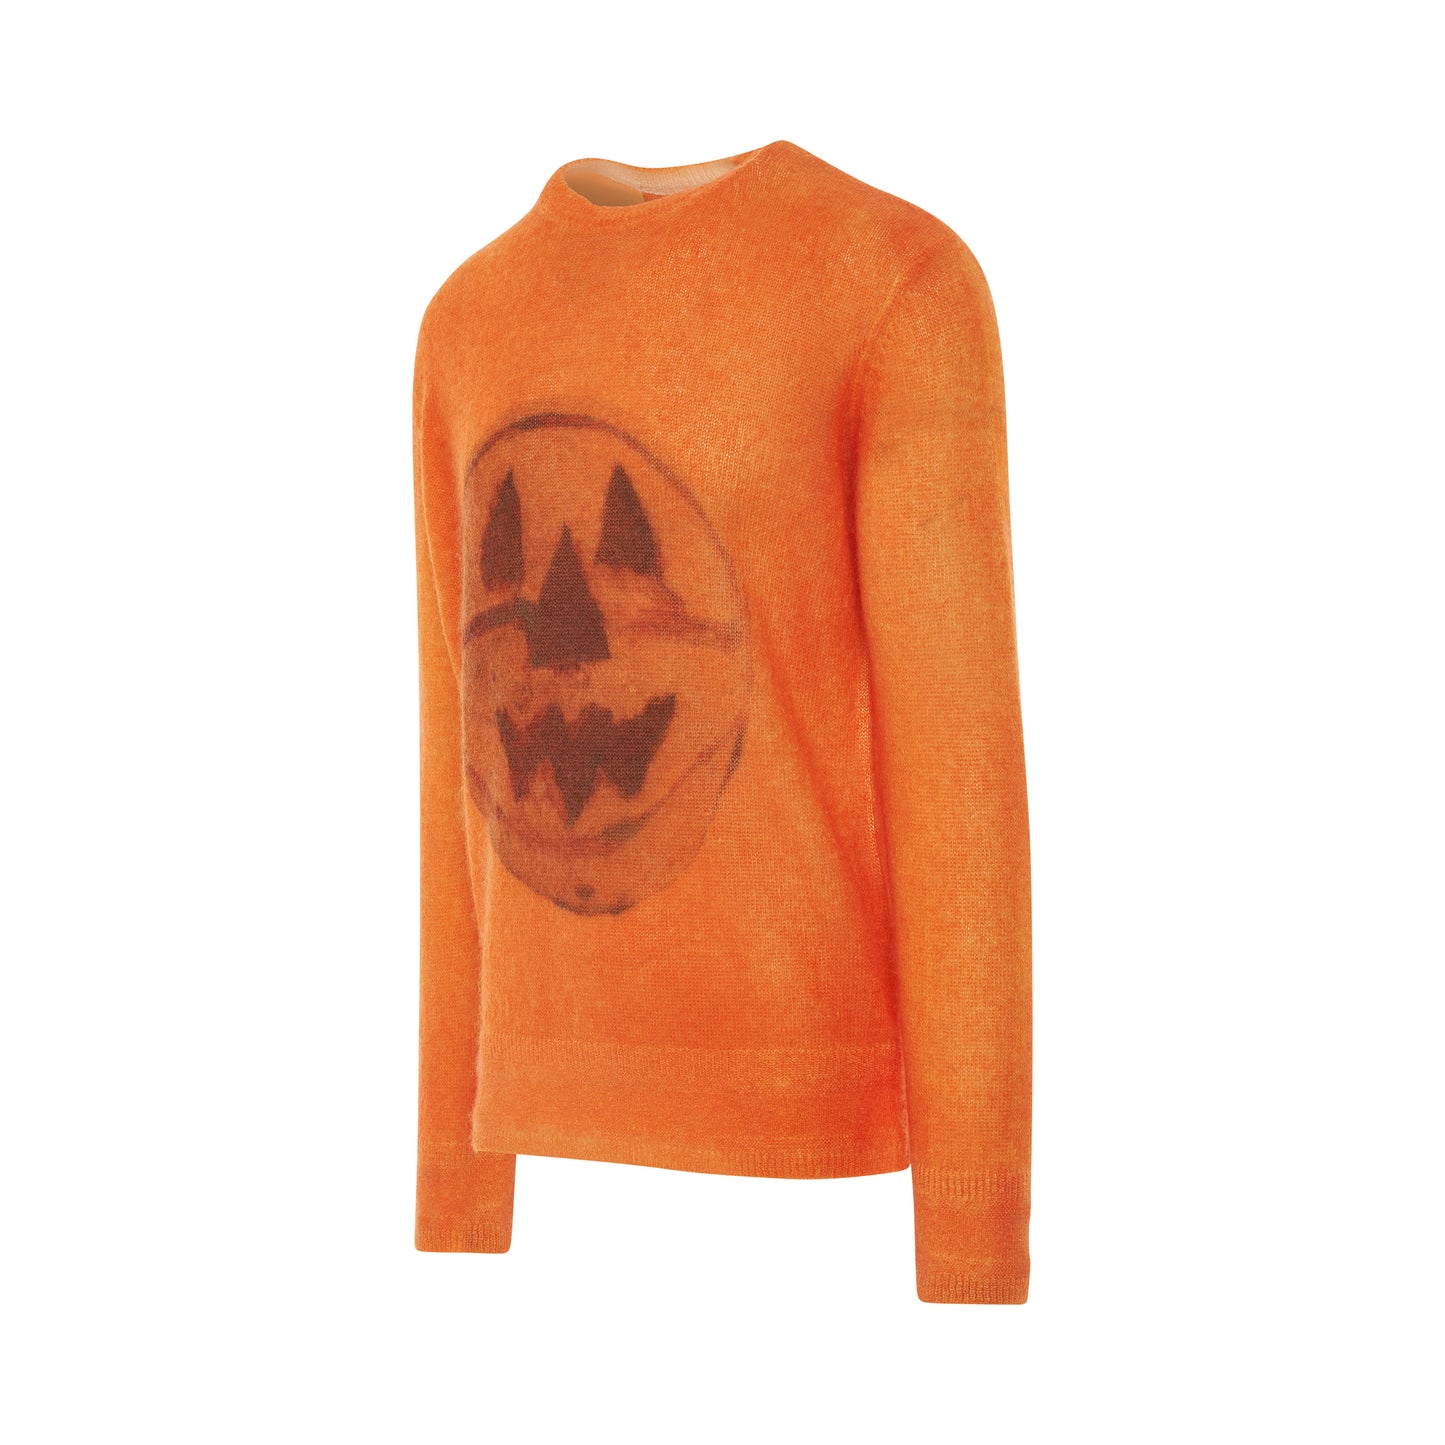 Mixmat Crewneck Print Sweater in Pumpkin